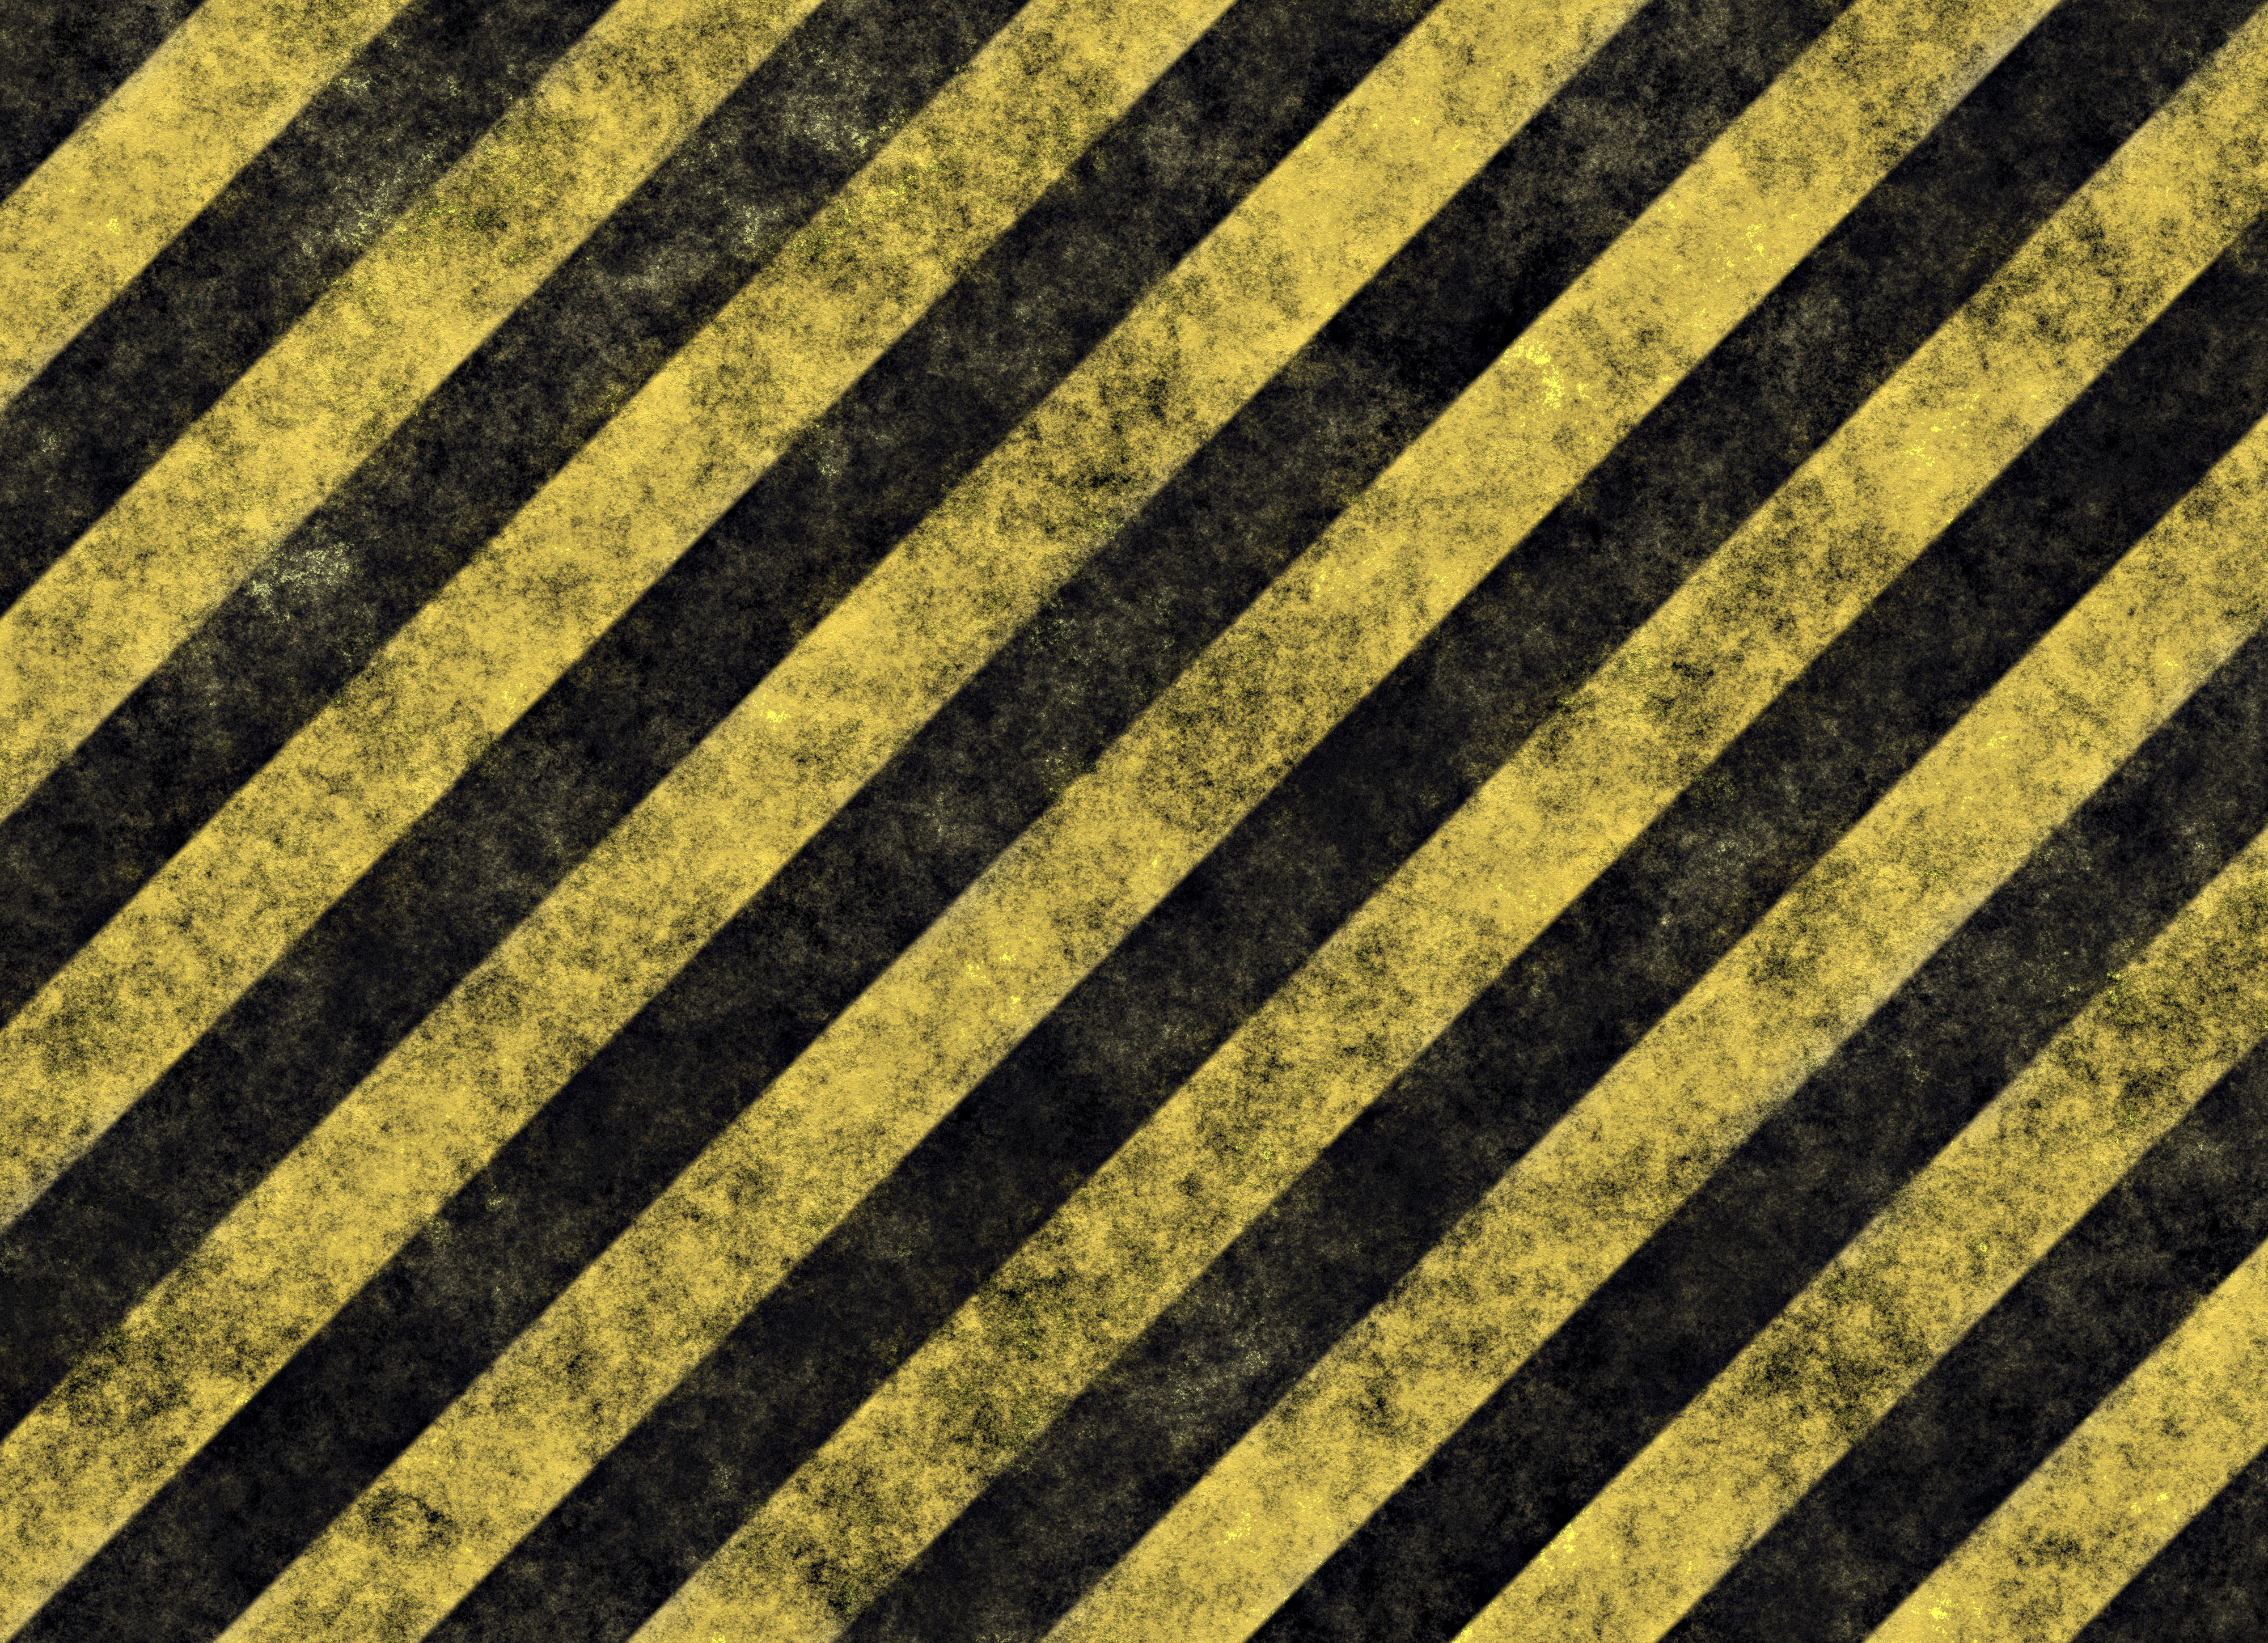 Hazard Stripes Wallpaper Or Background Image Mytextures